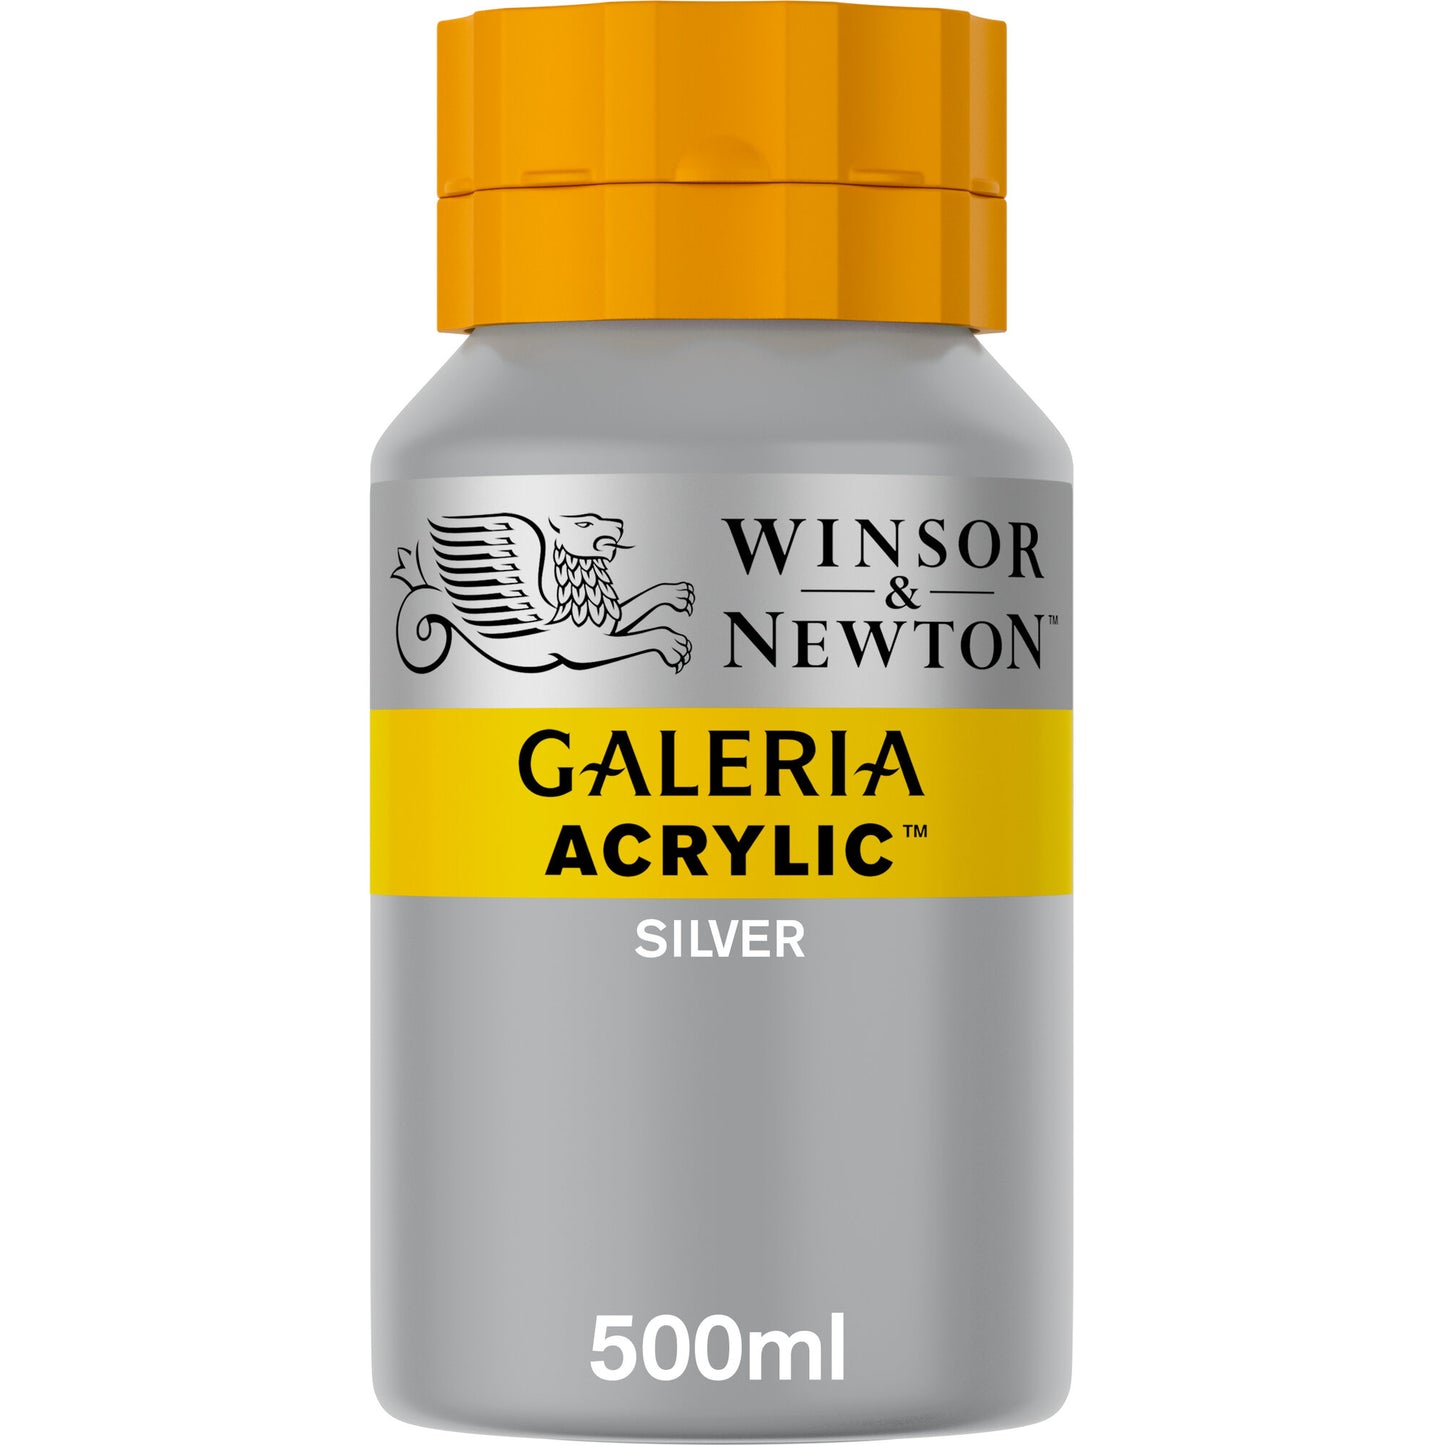 Galeria Acrylic Colour 500ml Bottle